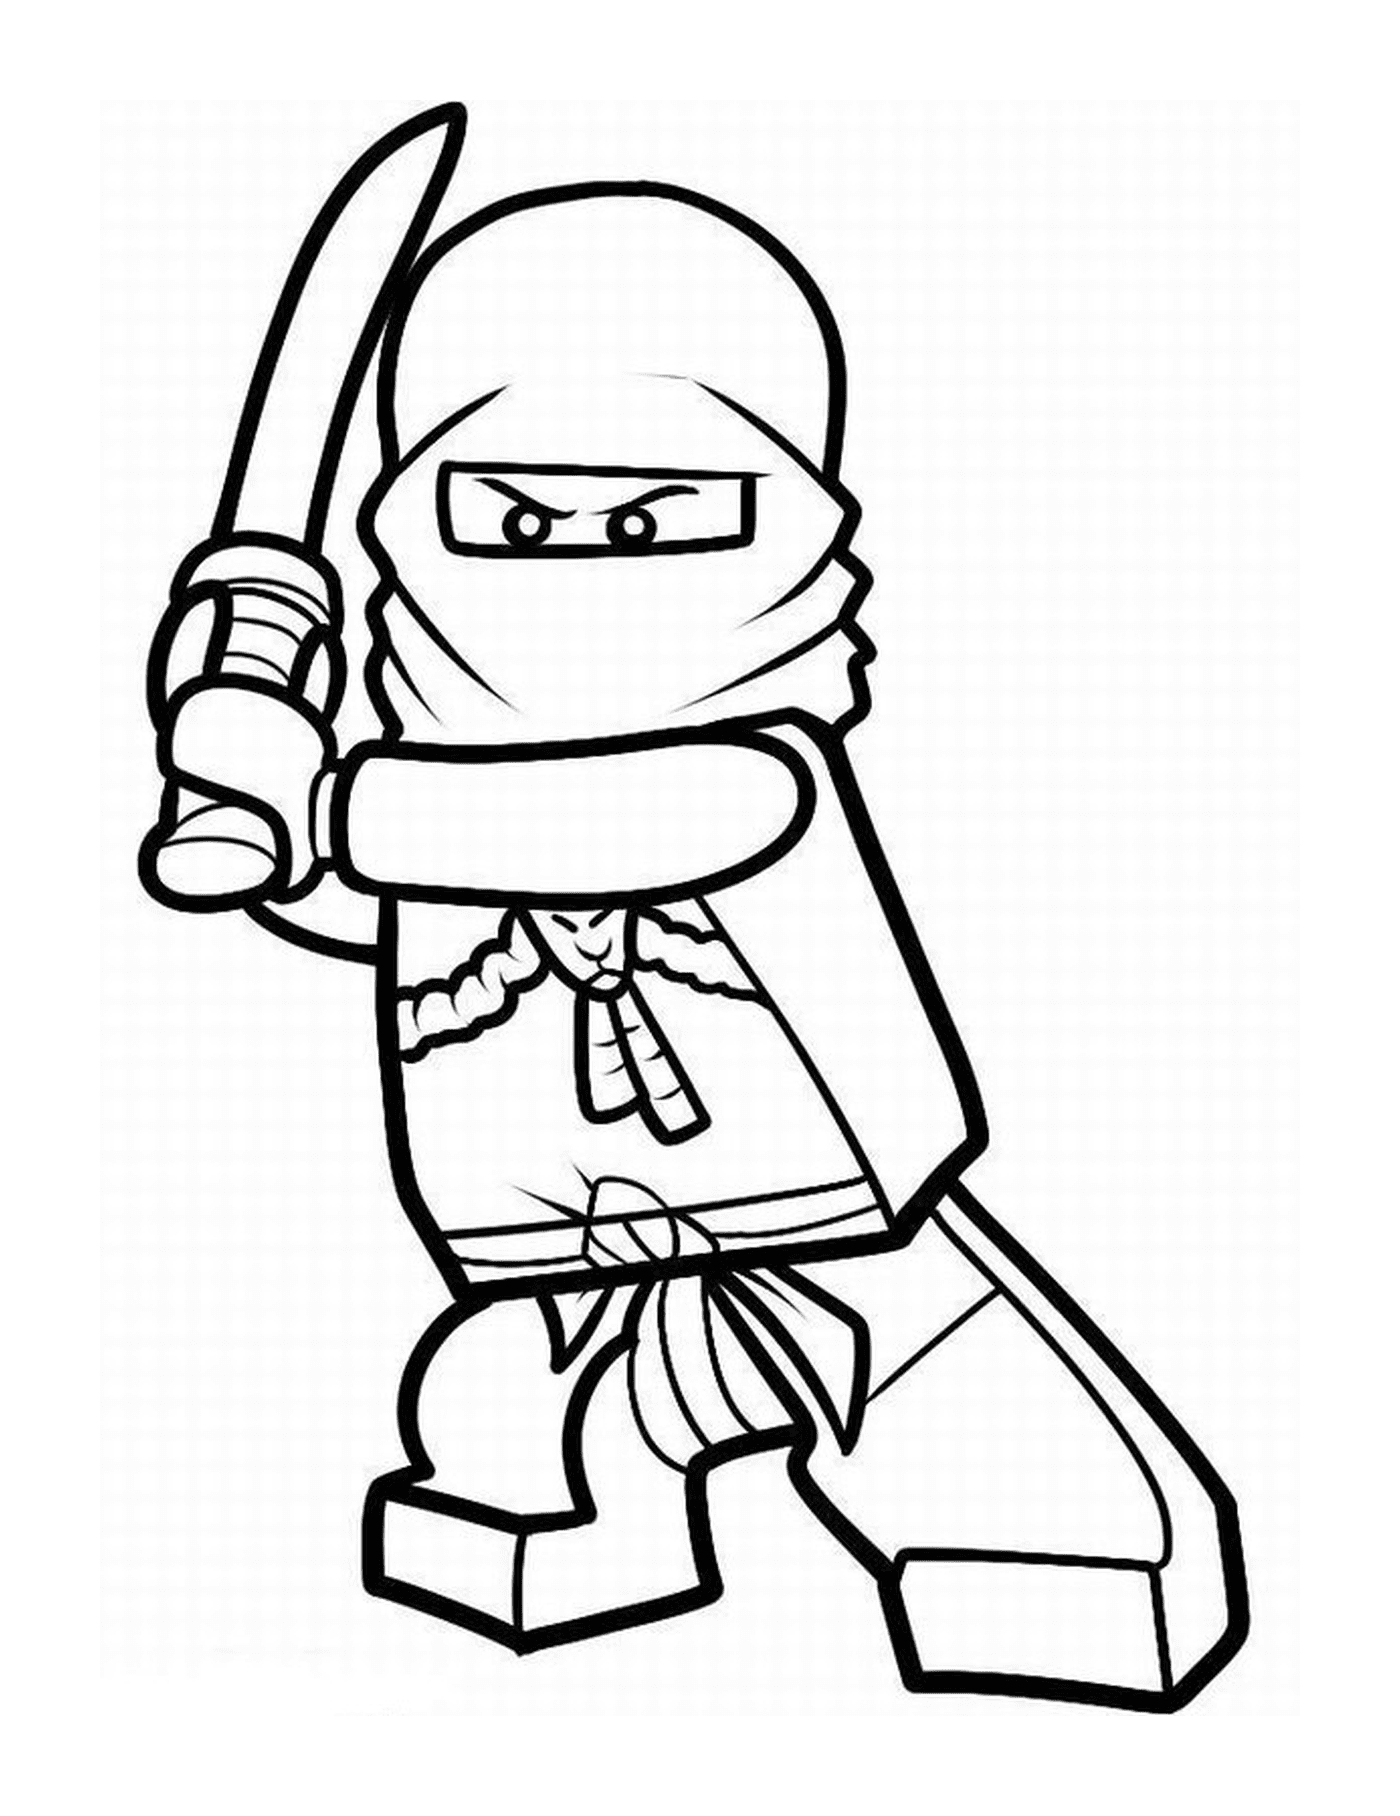  Ninja Lego holding a baseball bat 